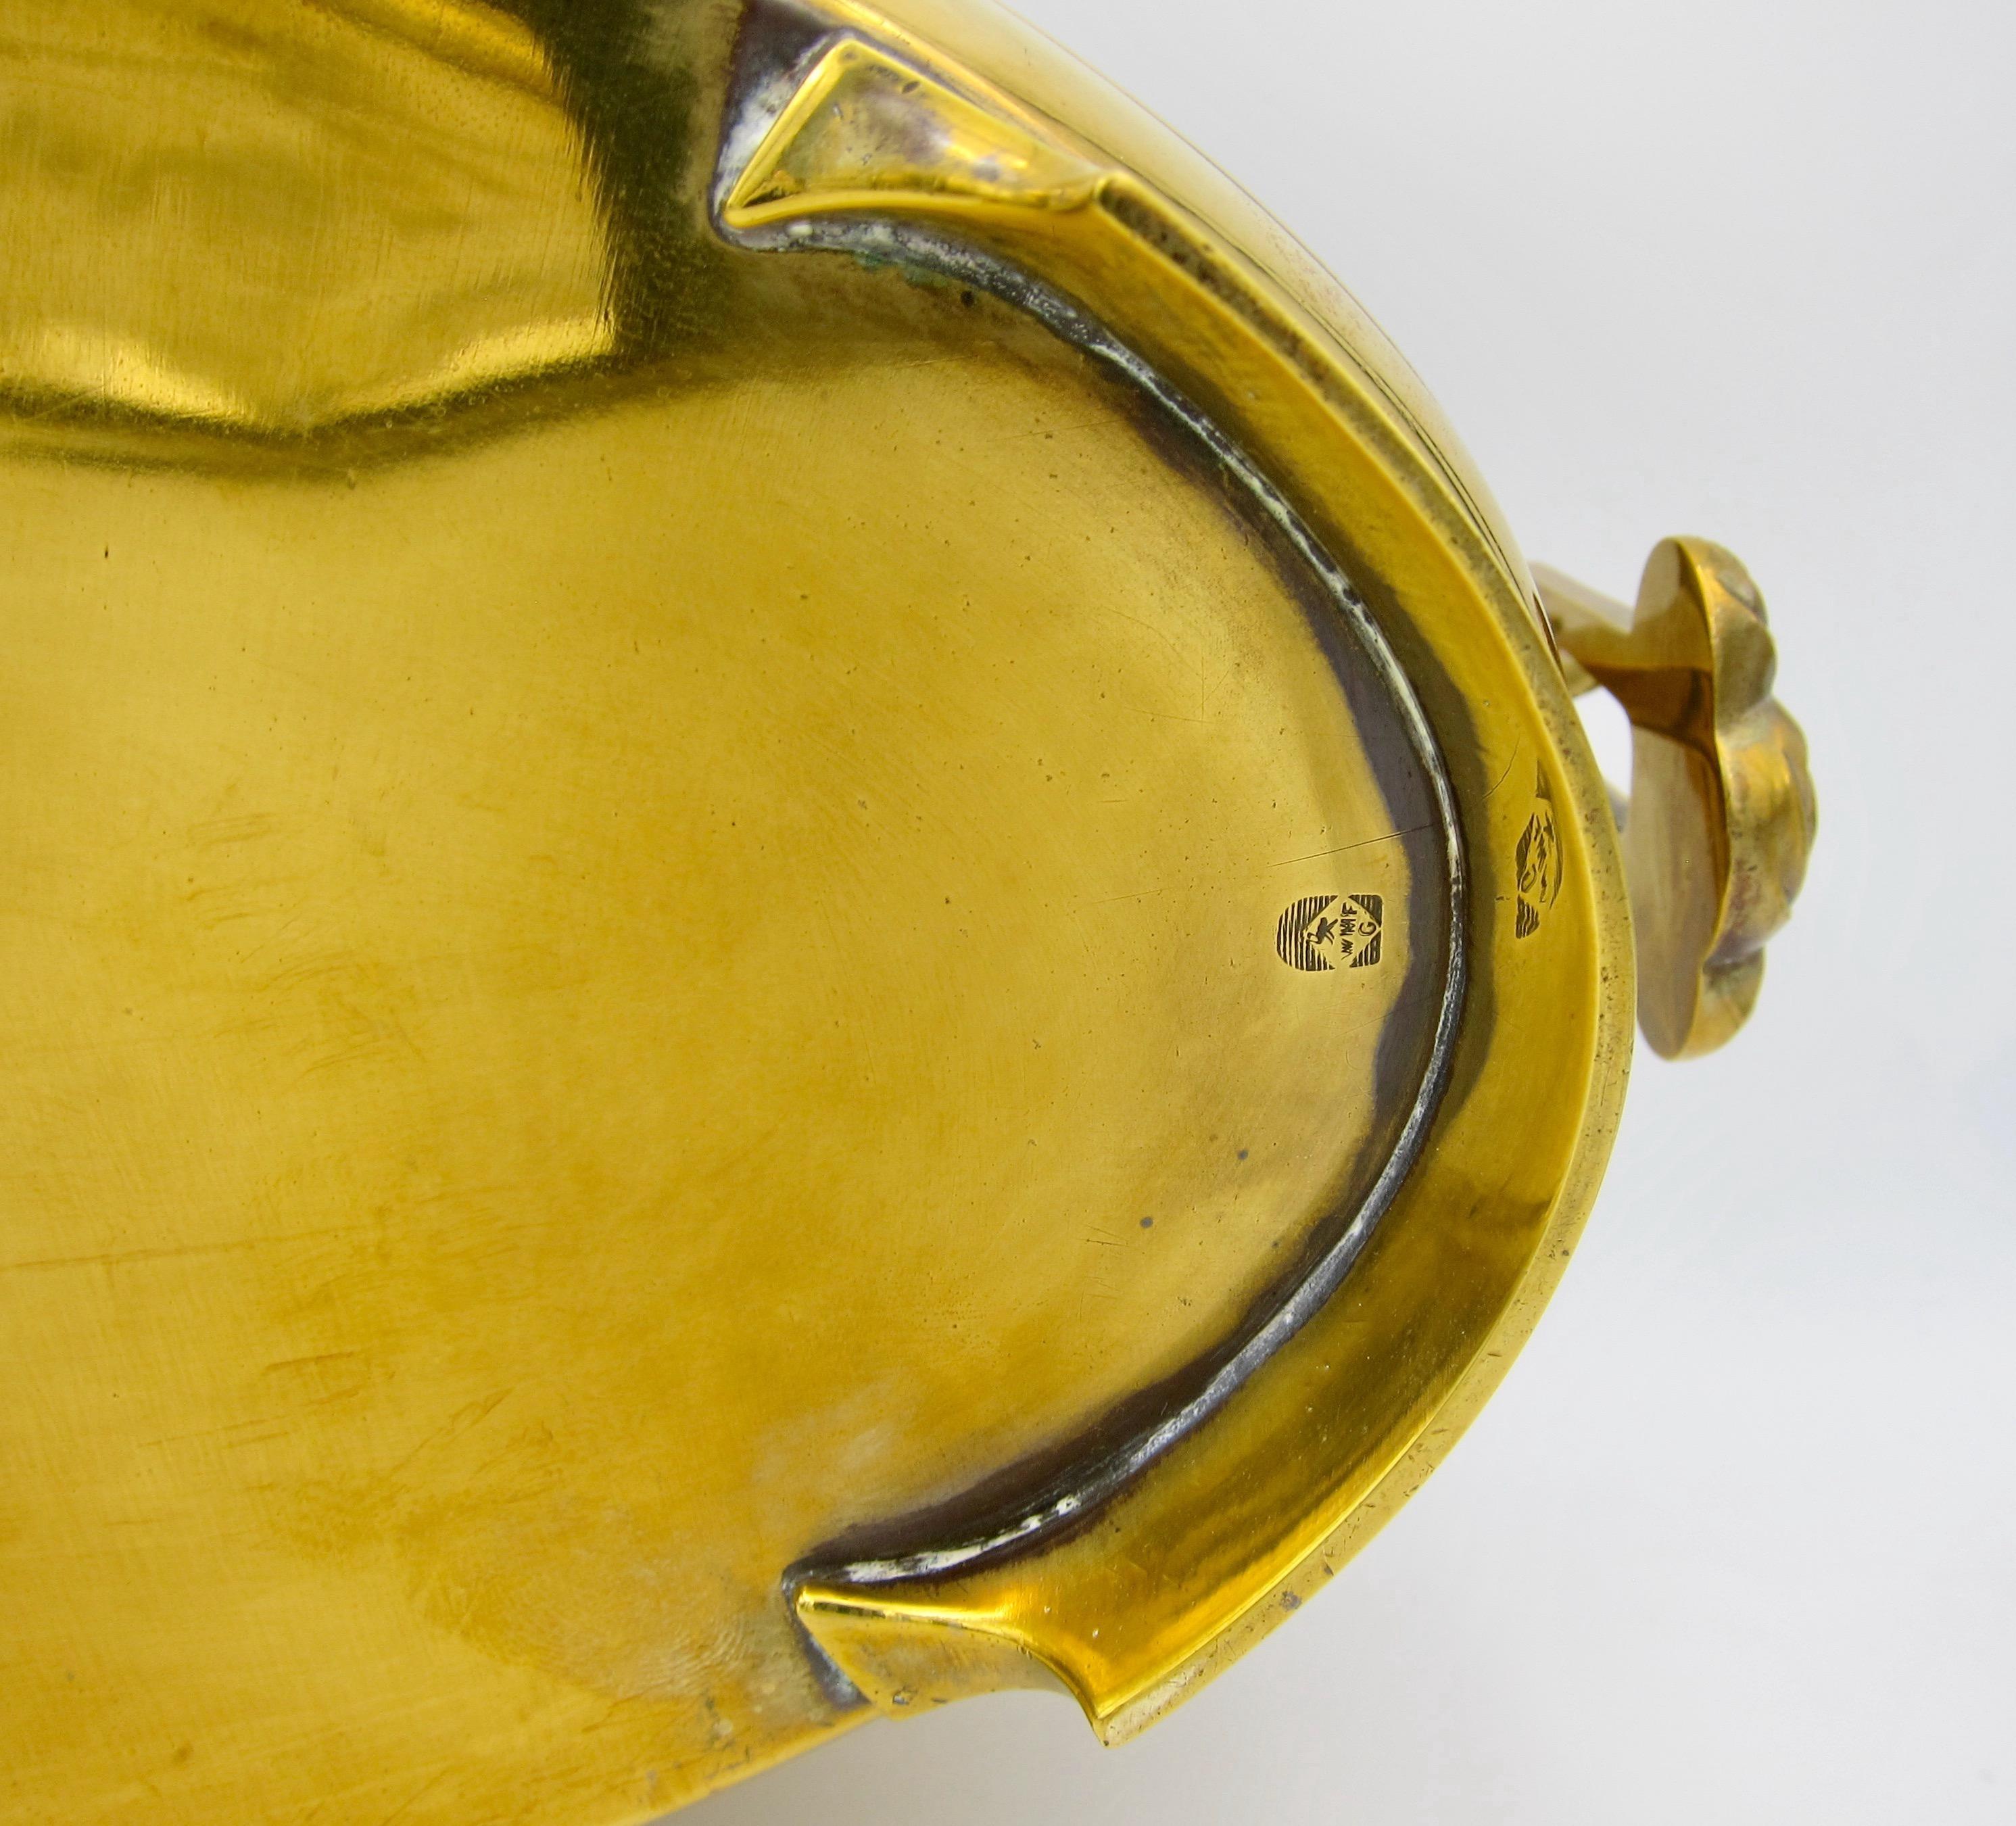 Großer ovaler Jugendstil-Pflanzkübel von WMF aus goldgelbem Messing:: um 1910 (20. Jahrhundert)